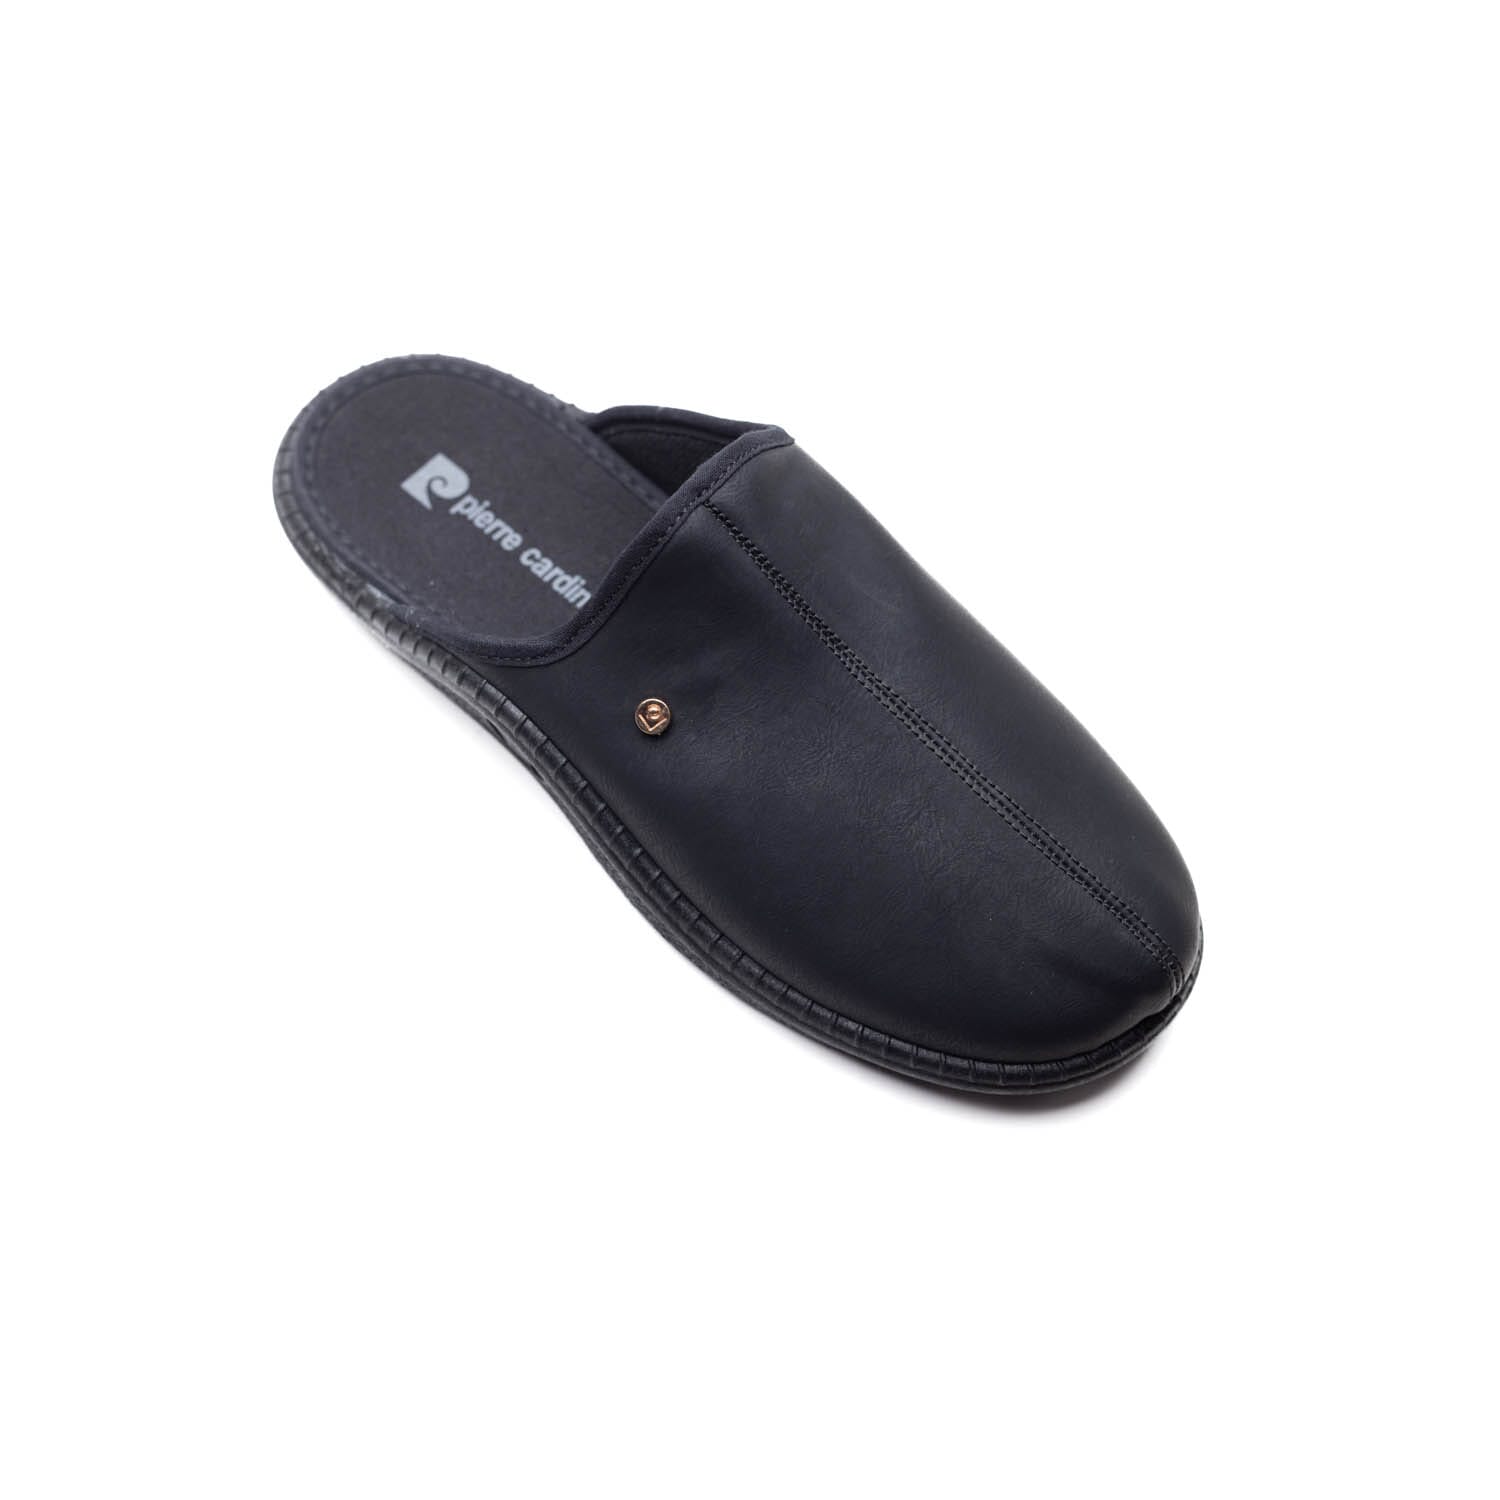 PIERRE CARDIN – PCM 100 – BLACK MONO – Perocili Shoes